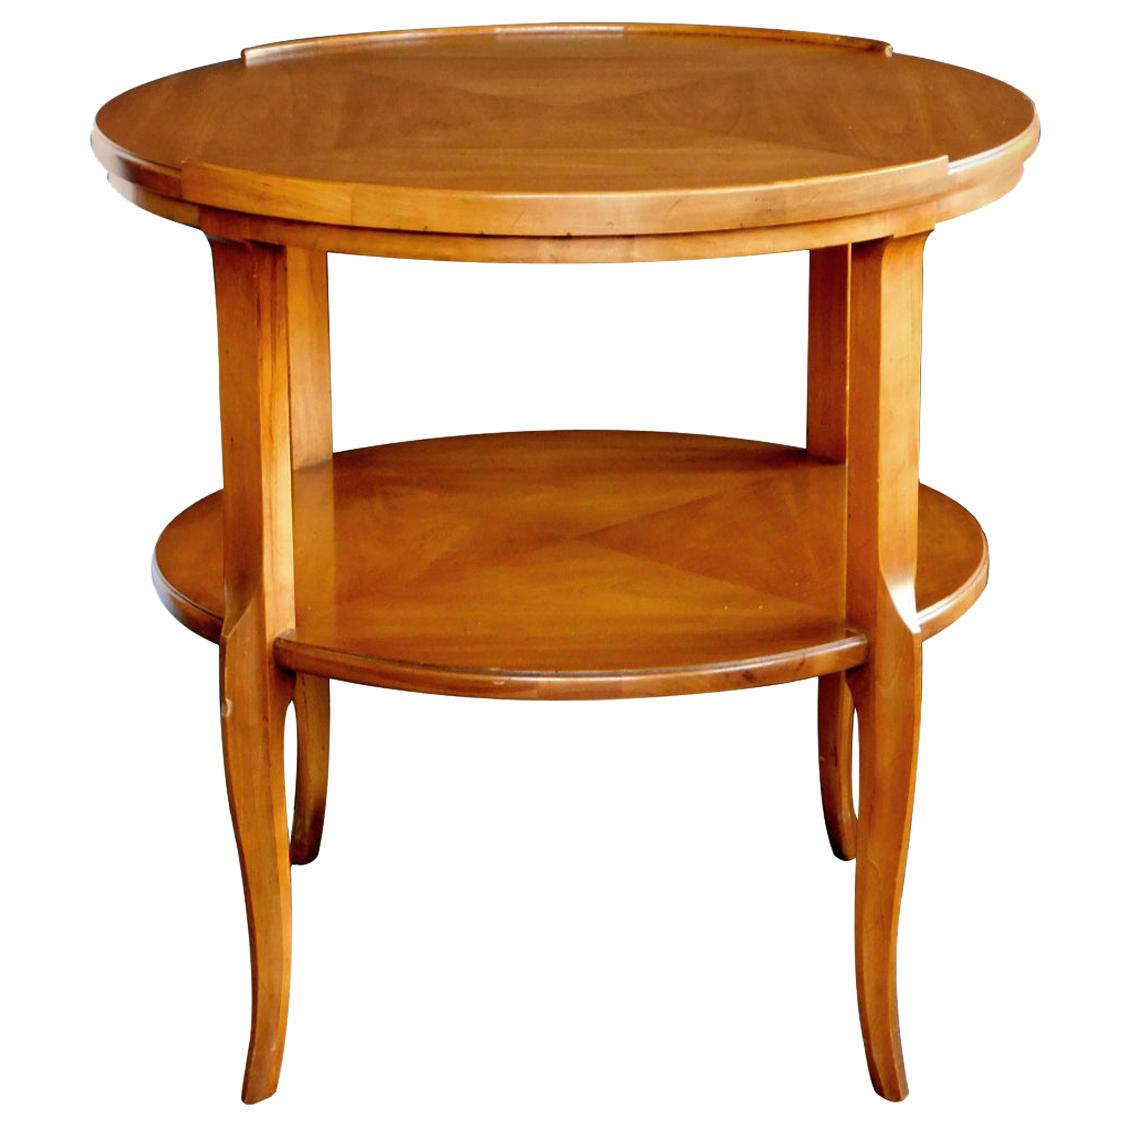 Stylish 1960s Circular Cherrywood Side/End Table by Widdicomb